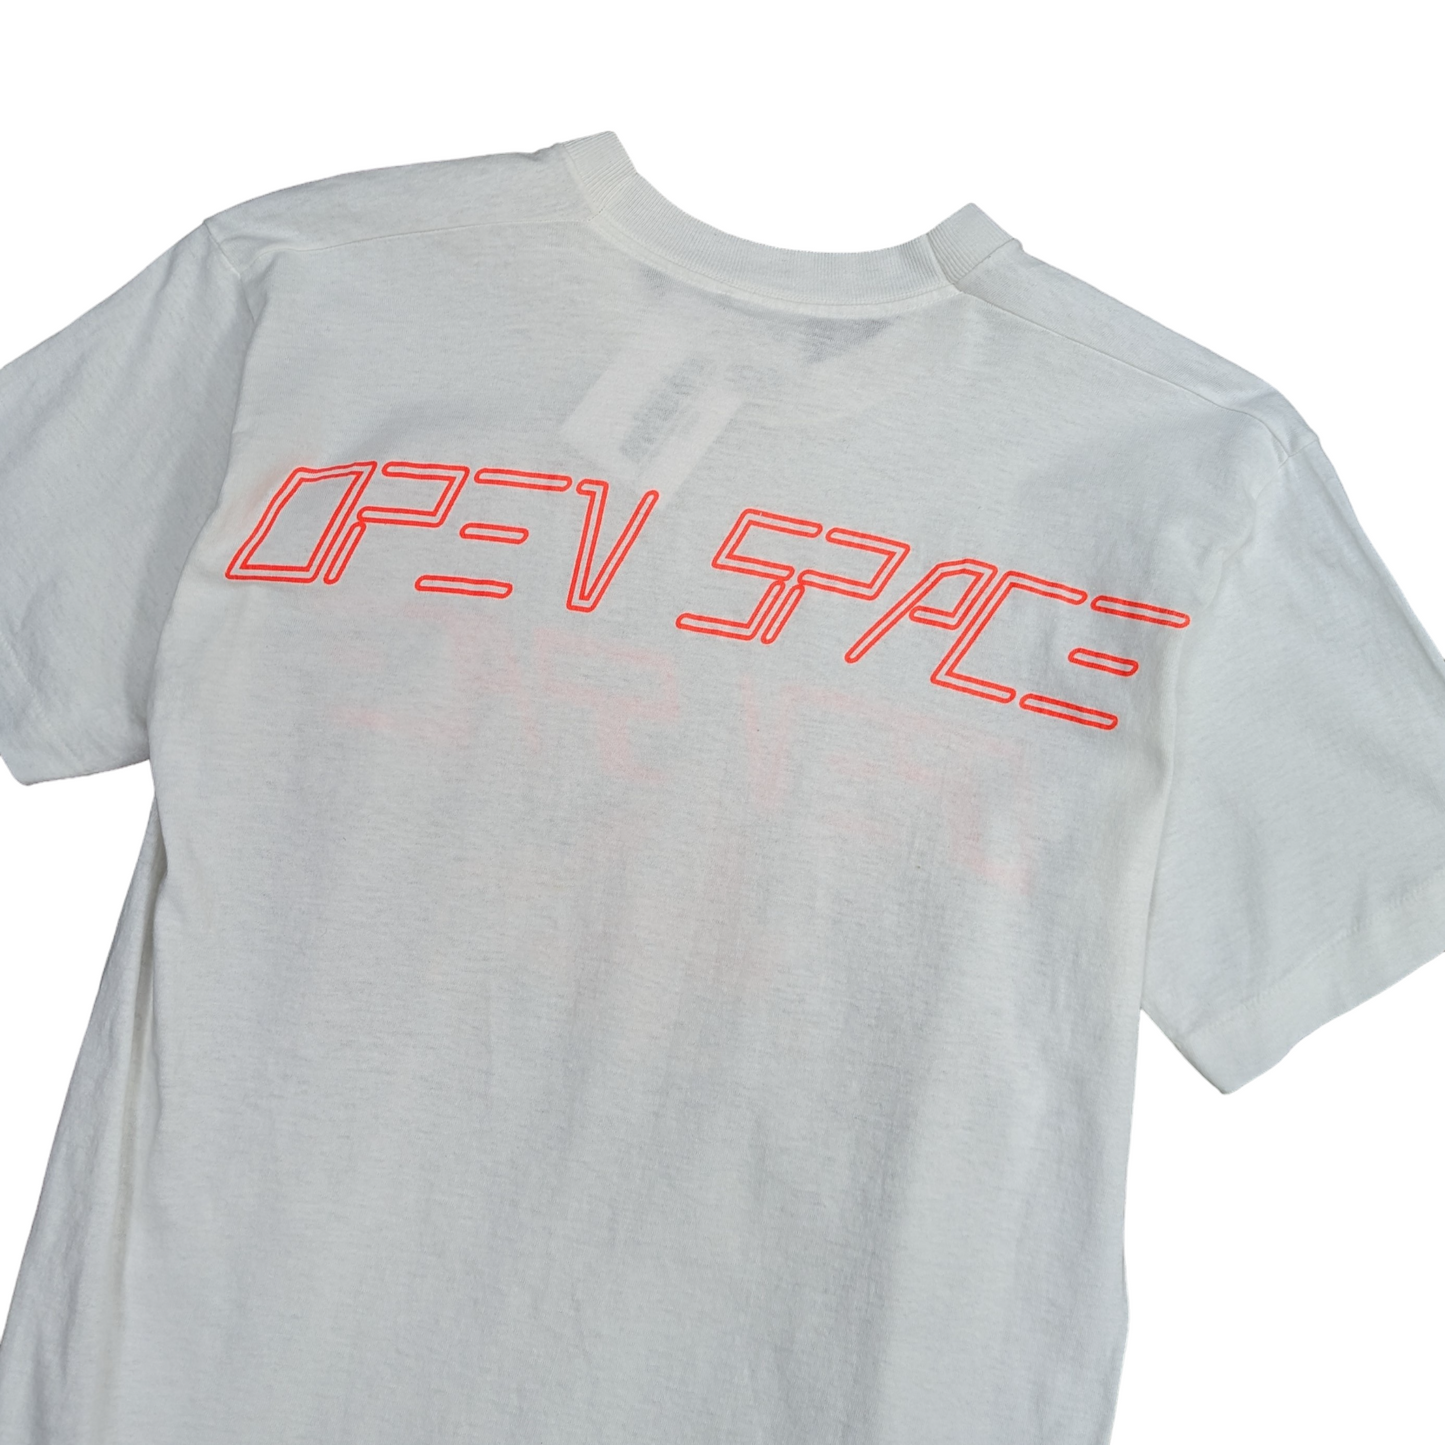 90s Open Space Single Stitch T-Shirt Size M